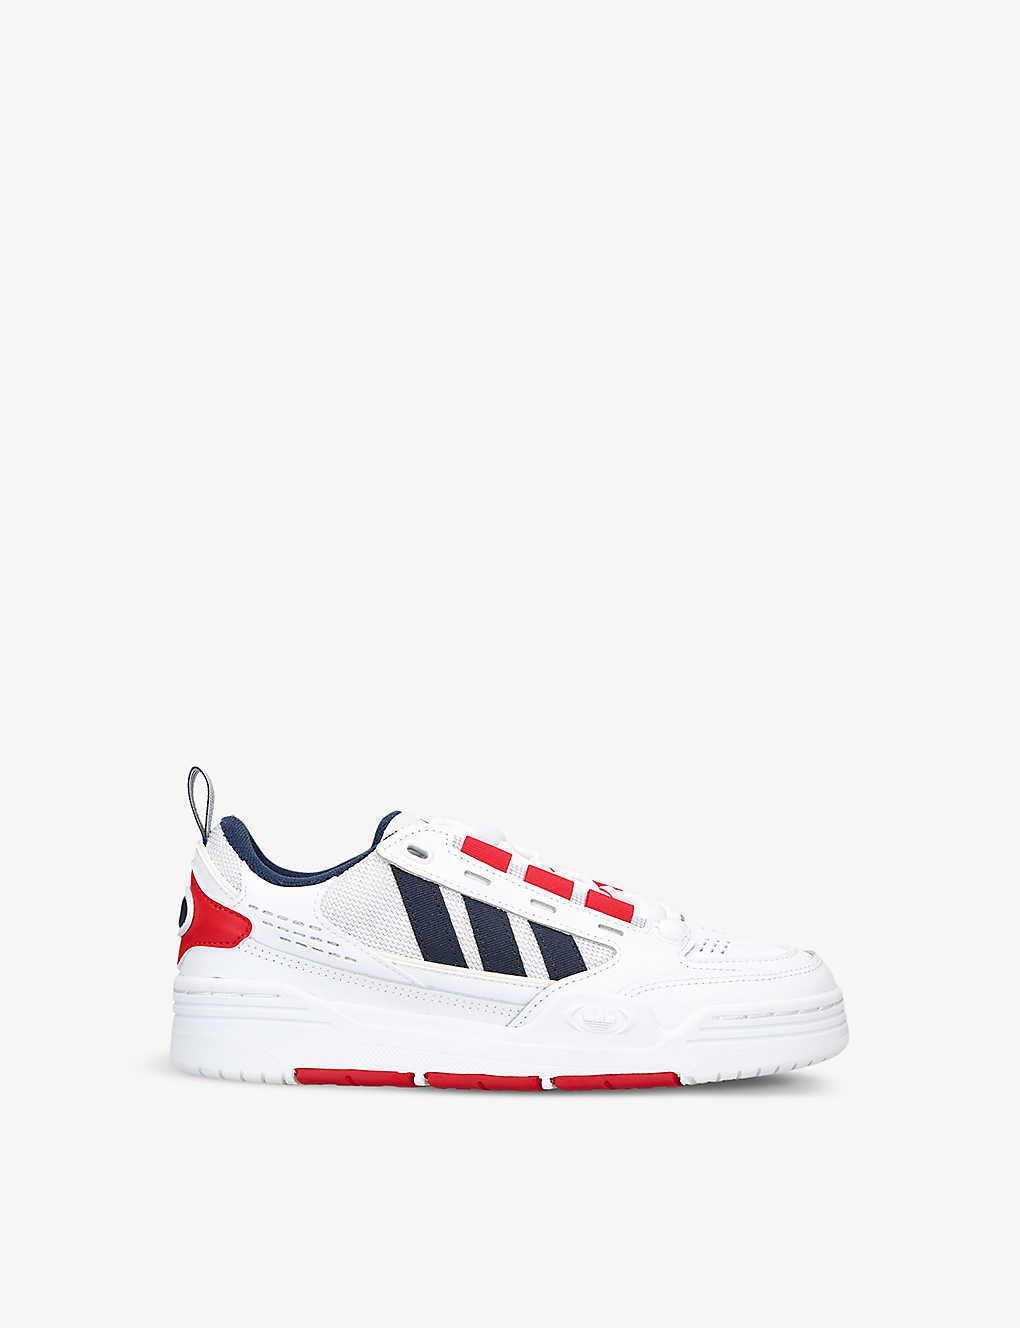 Adidas Originals Adidas Kids Adi2000 J Sneakers In White/red | ModeSens